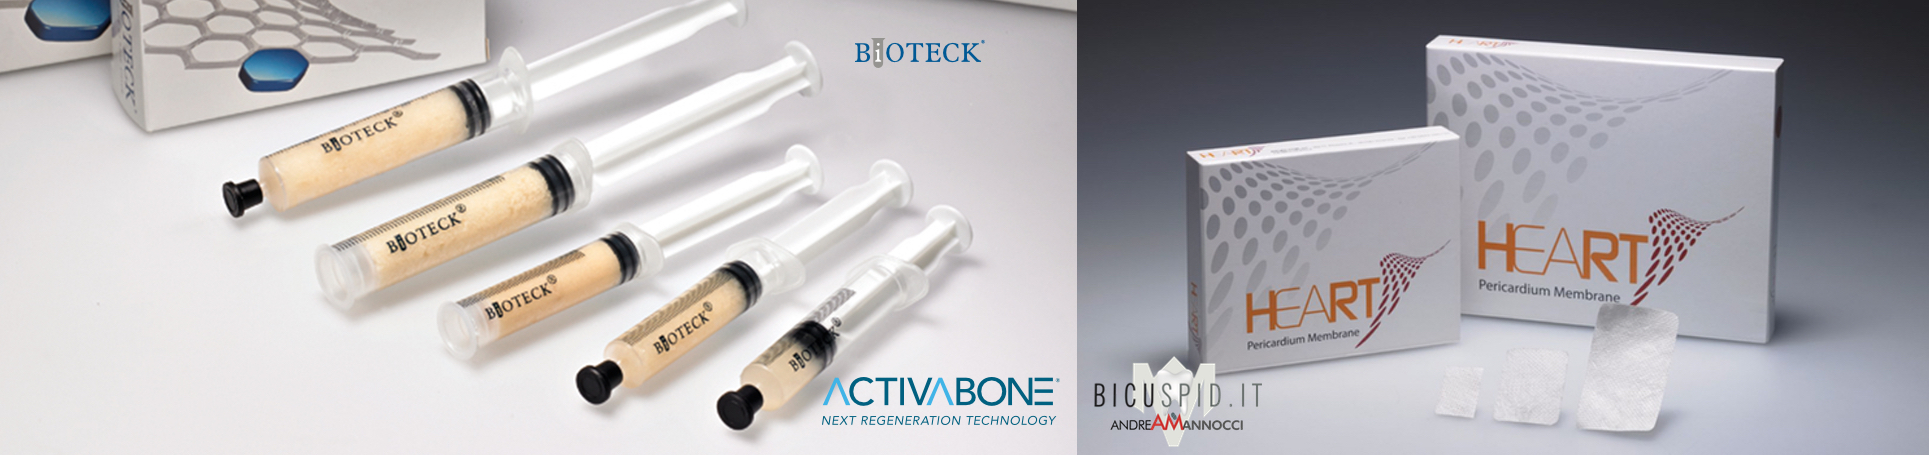 Bioteck Activabone-Heart andrea mannocci